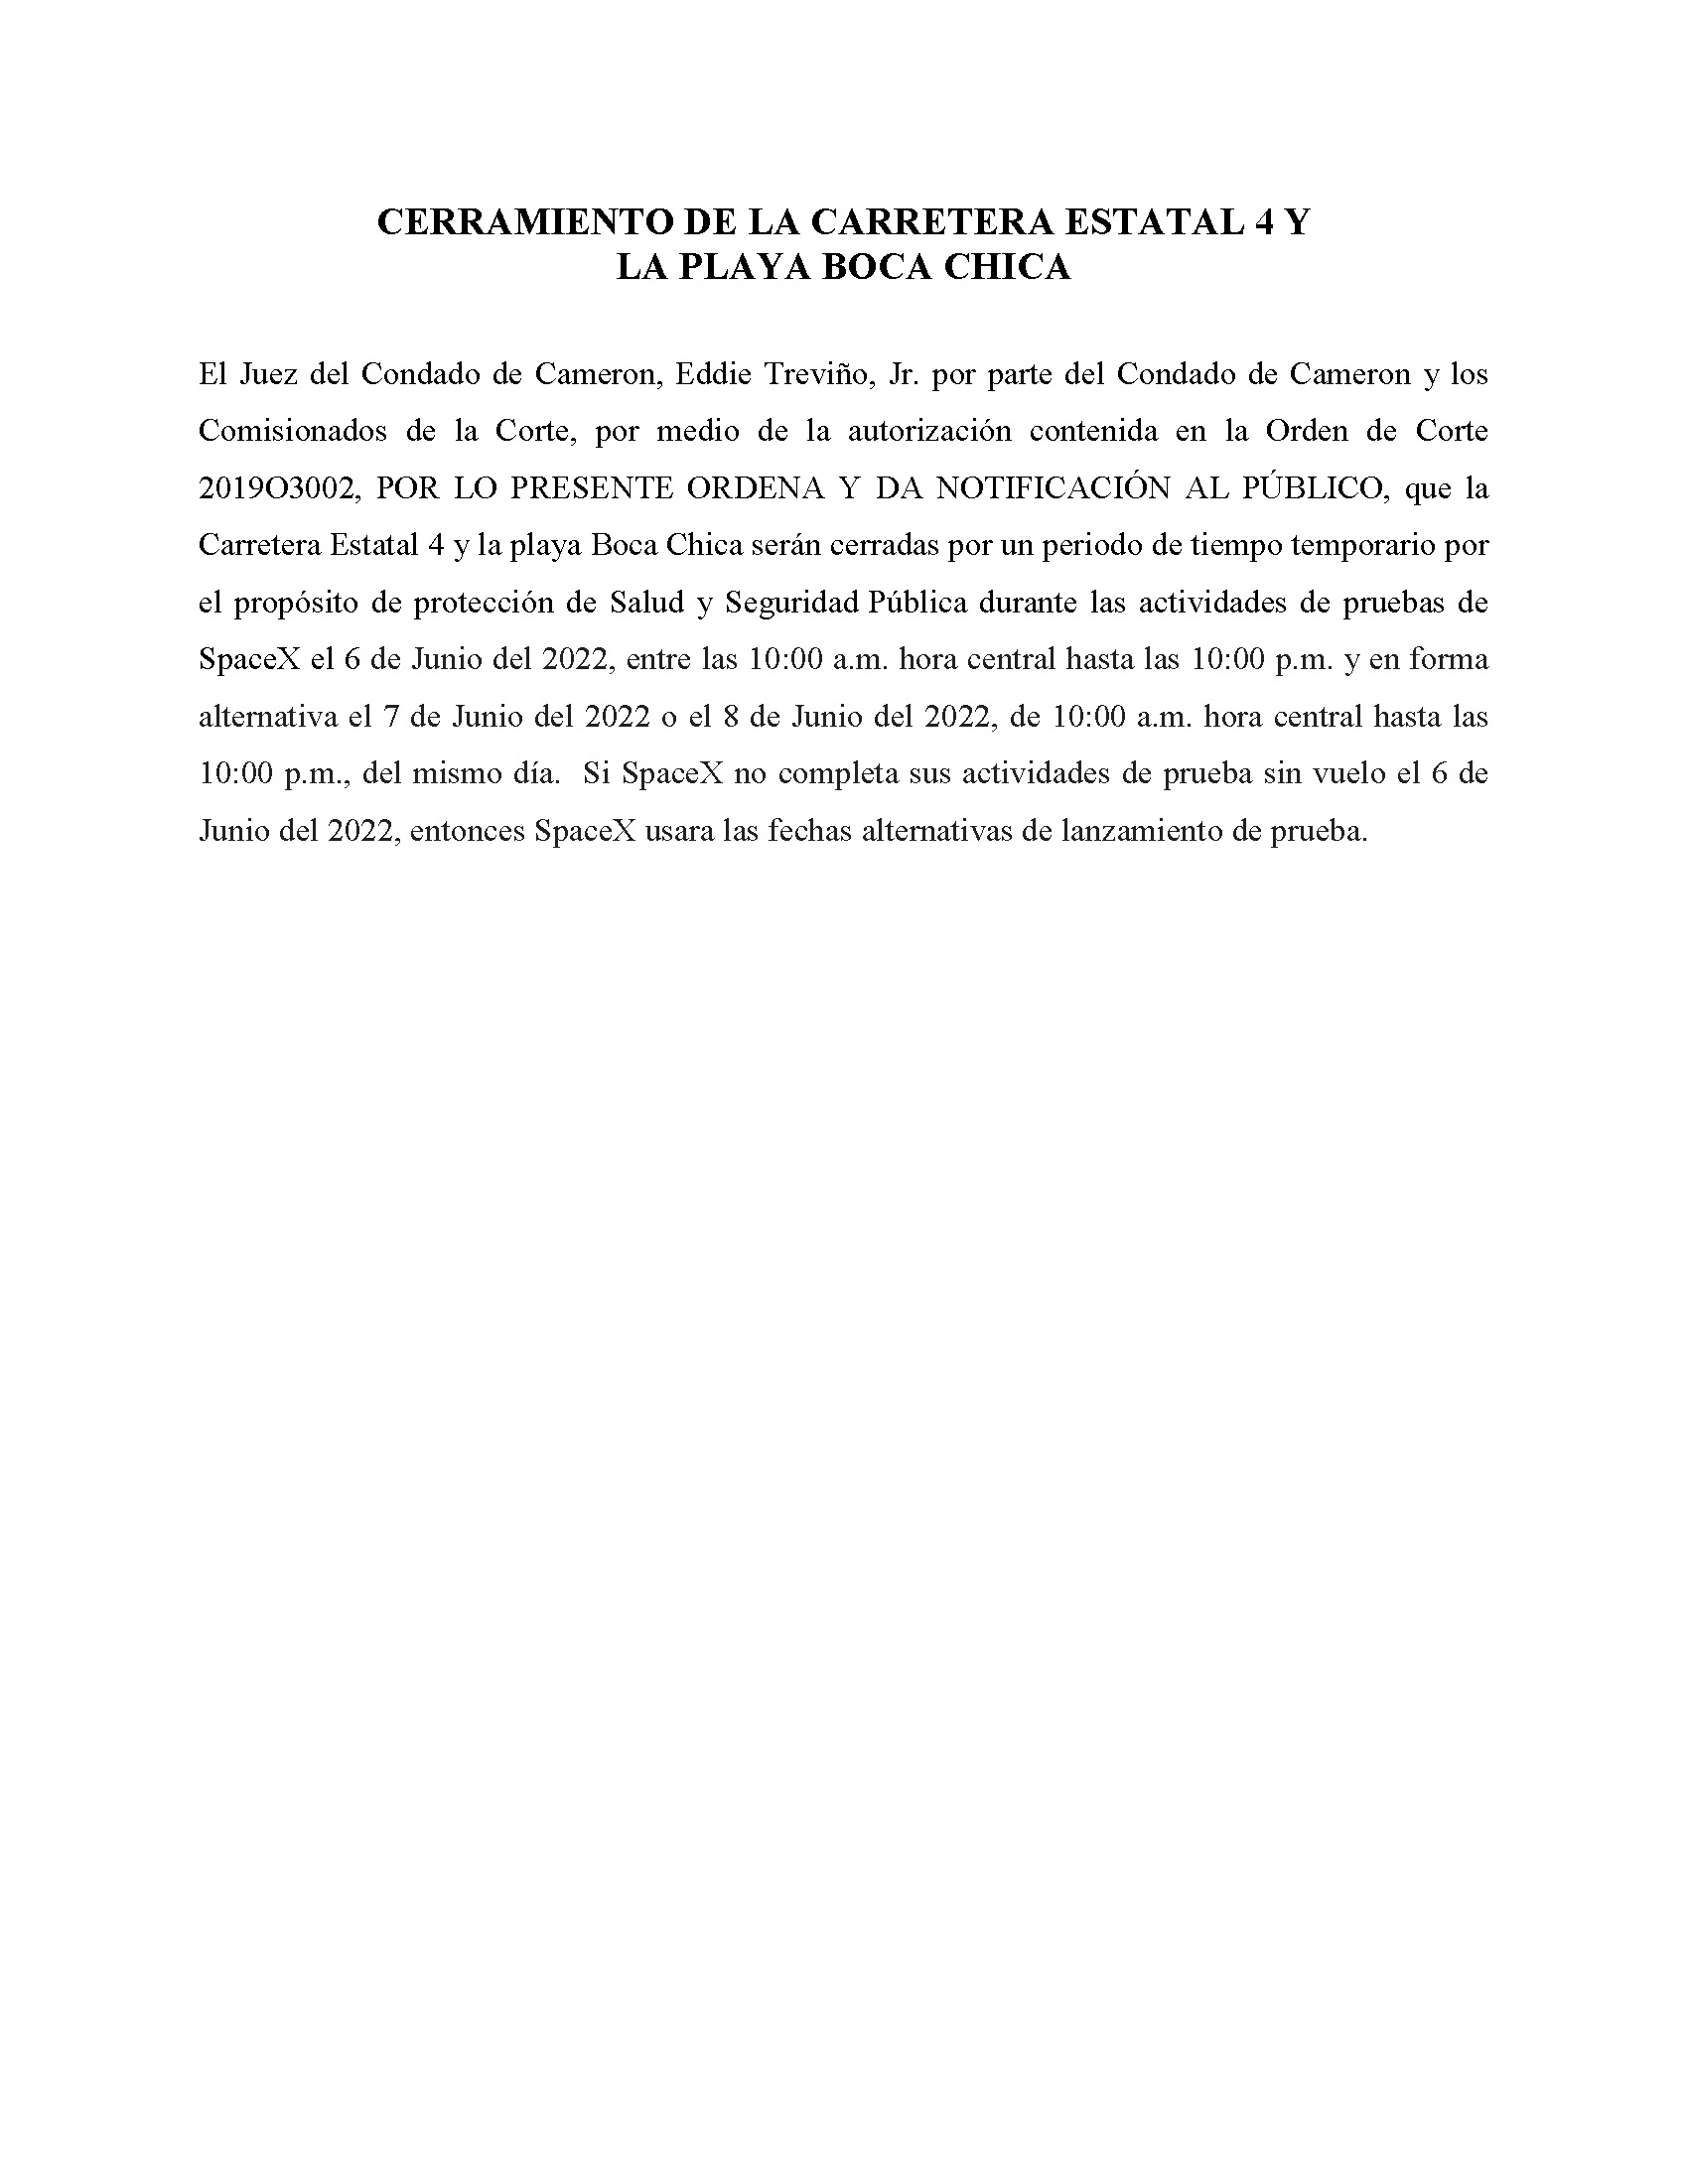 ORDER.CLOSURE OF HIGHWAY 4 Y LA PLAYA BOCA CHICA.SPANISH.06.06.2022